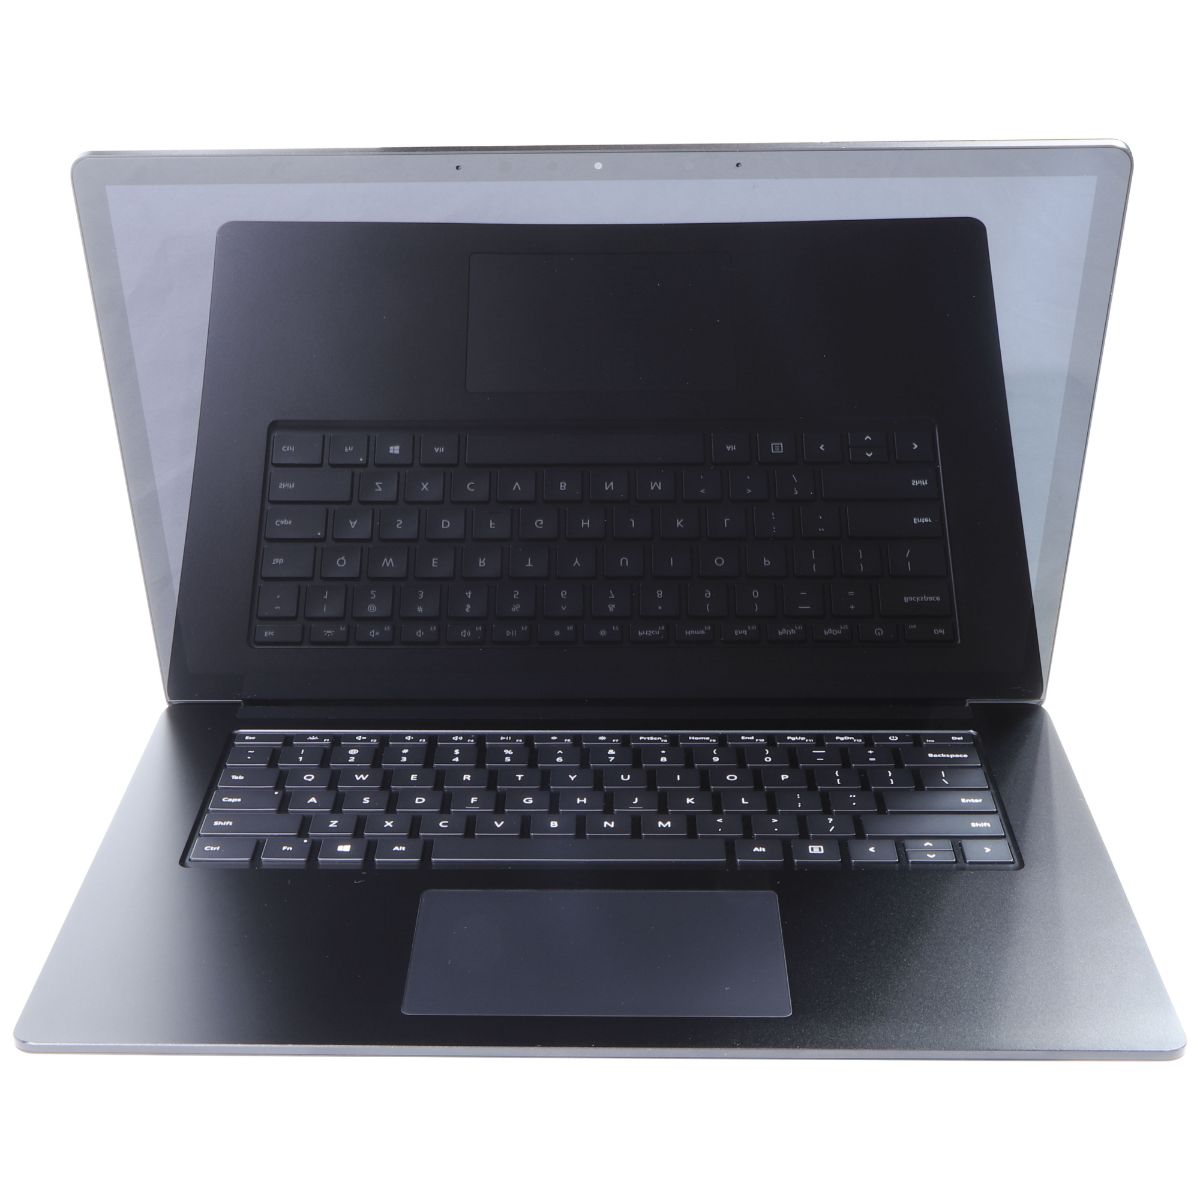 Microsoft Surface Laptop 3 (15-inch) AMD Ryzen 5 / RX Vega 9 / 8GB/256GB - Black Laptops - PC Laptops & Netbooks Microsoft    - Simple Cell Bulk Wholesale Pricing - USA Seller